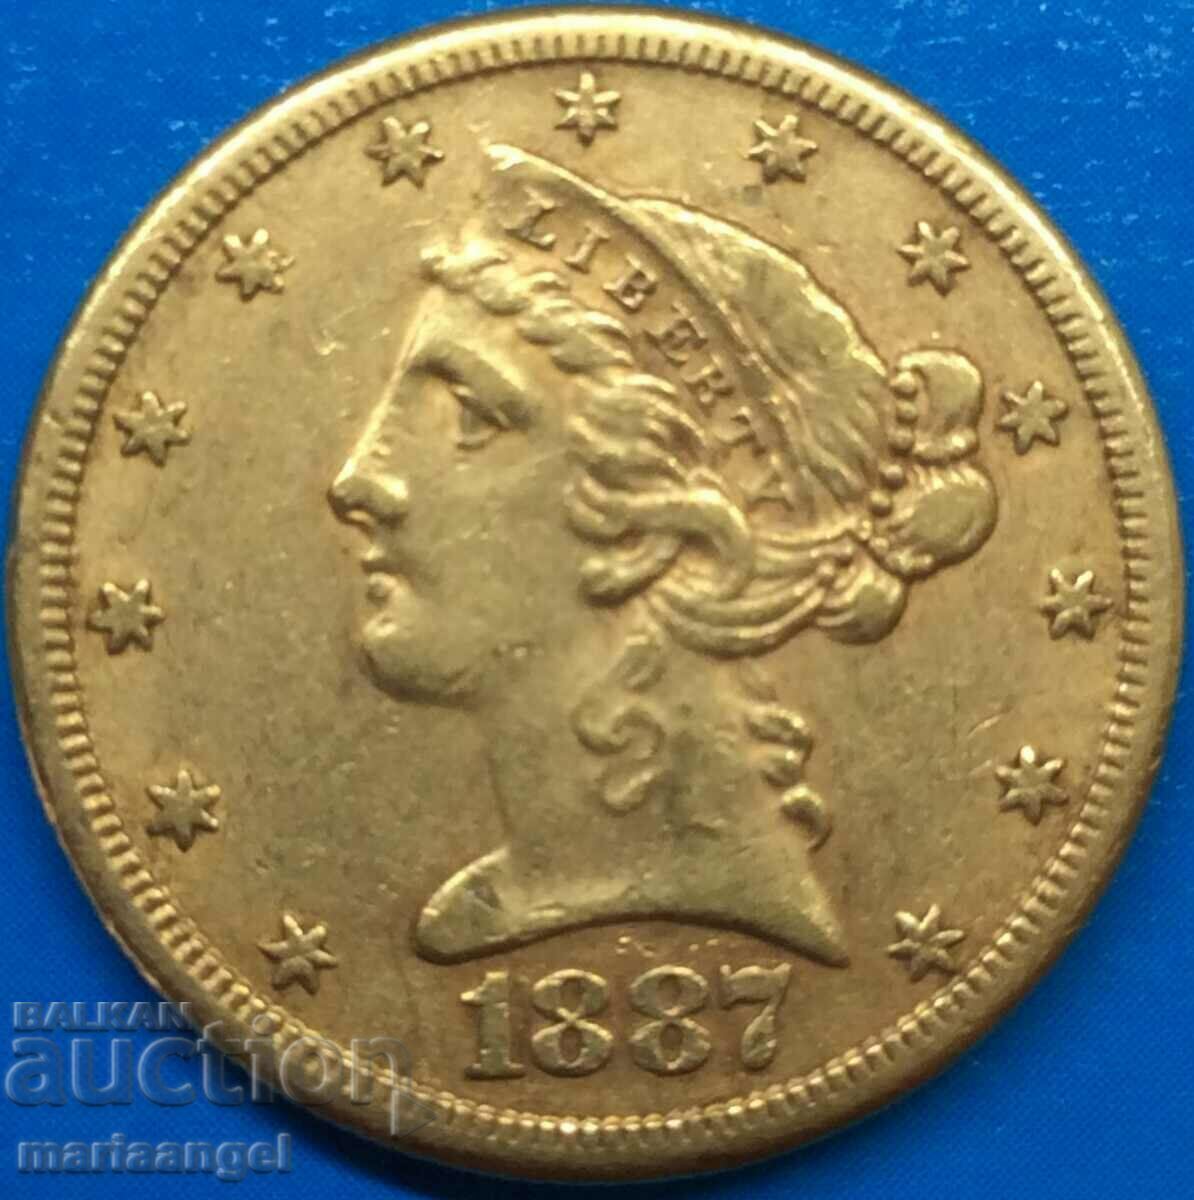 5 Dollars 1887 USA S Gold Liberty 8,36g 21,6mm